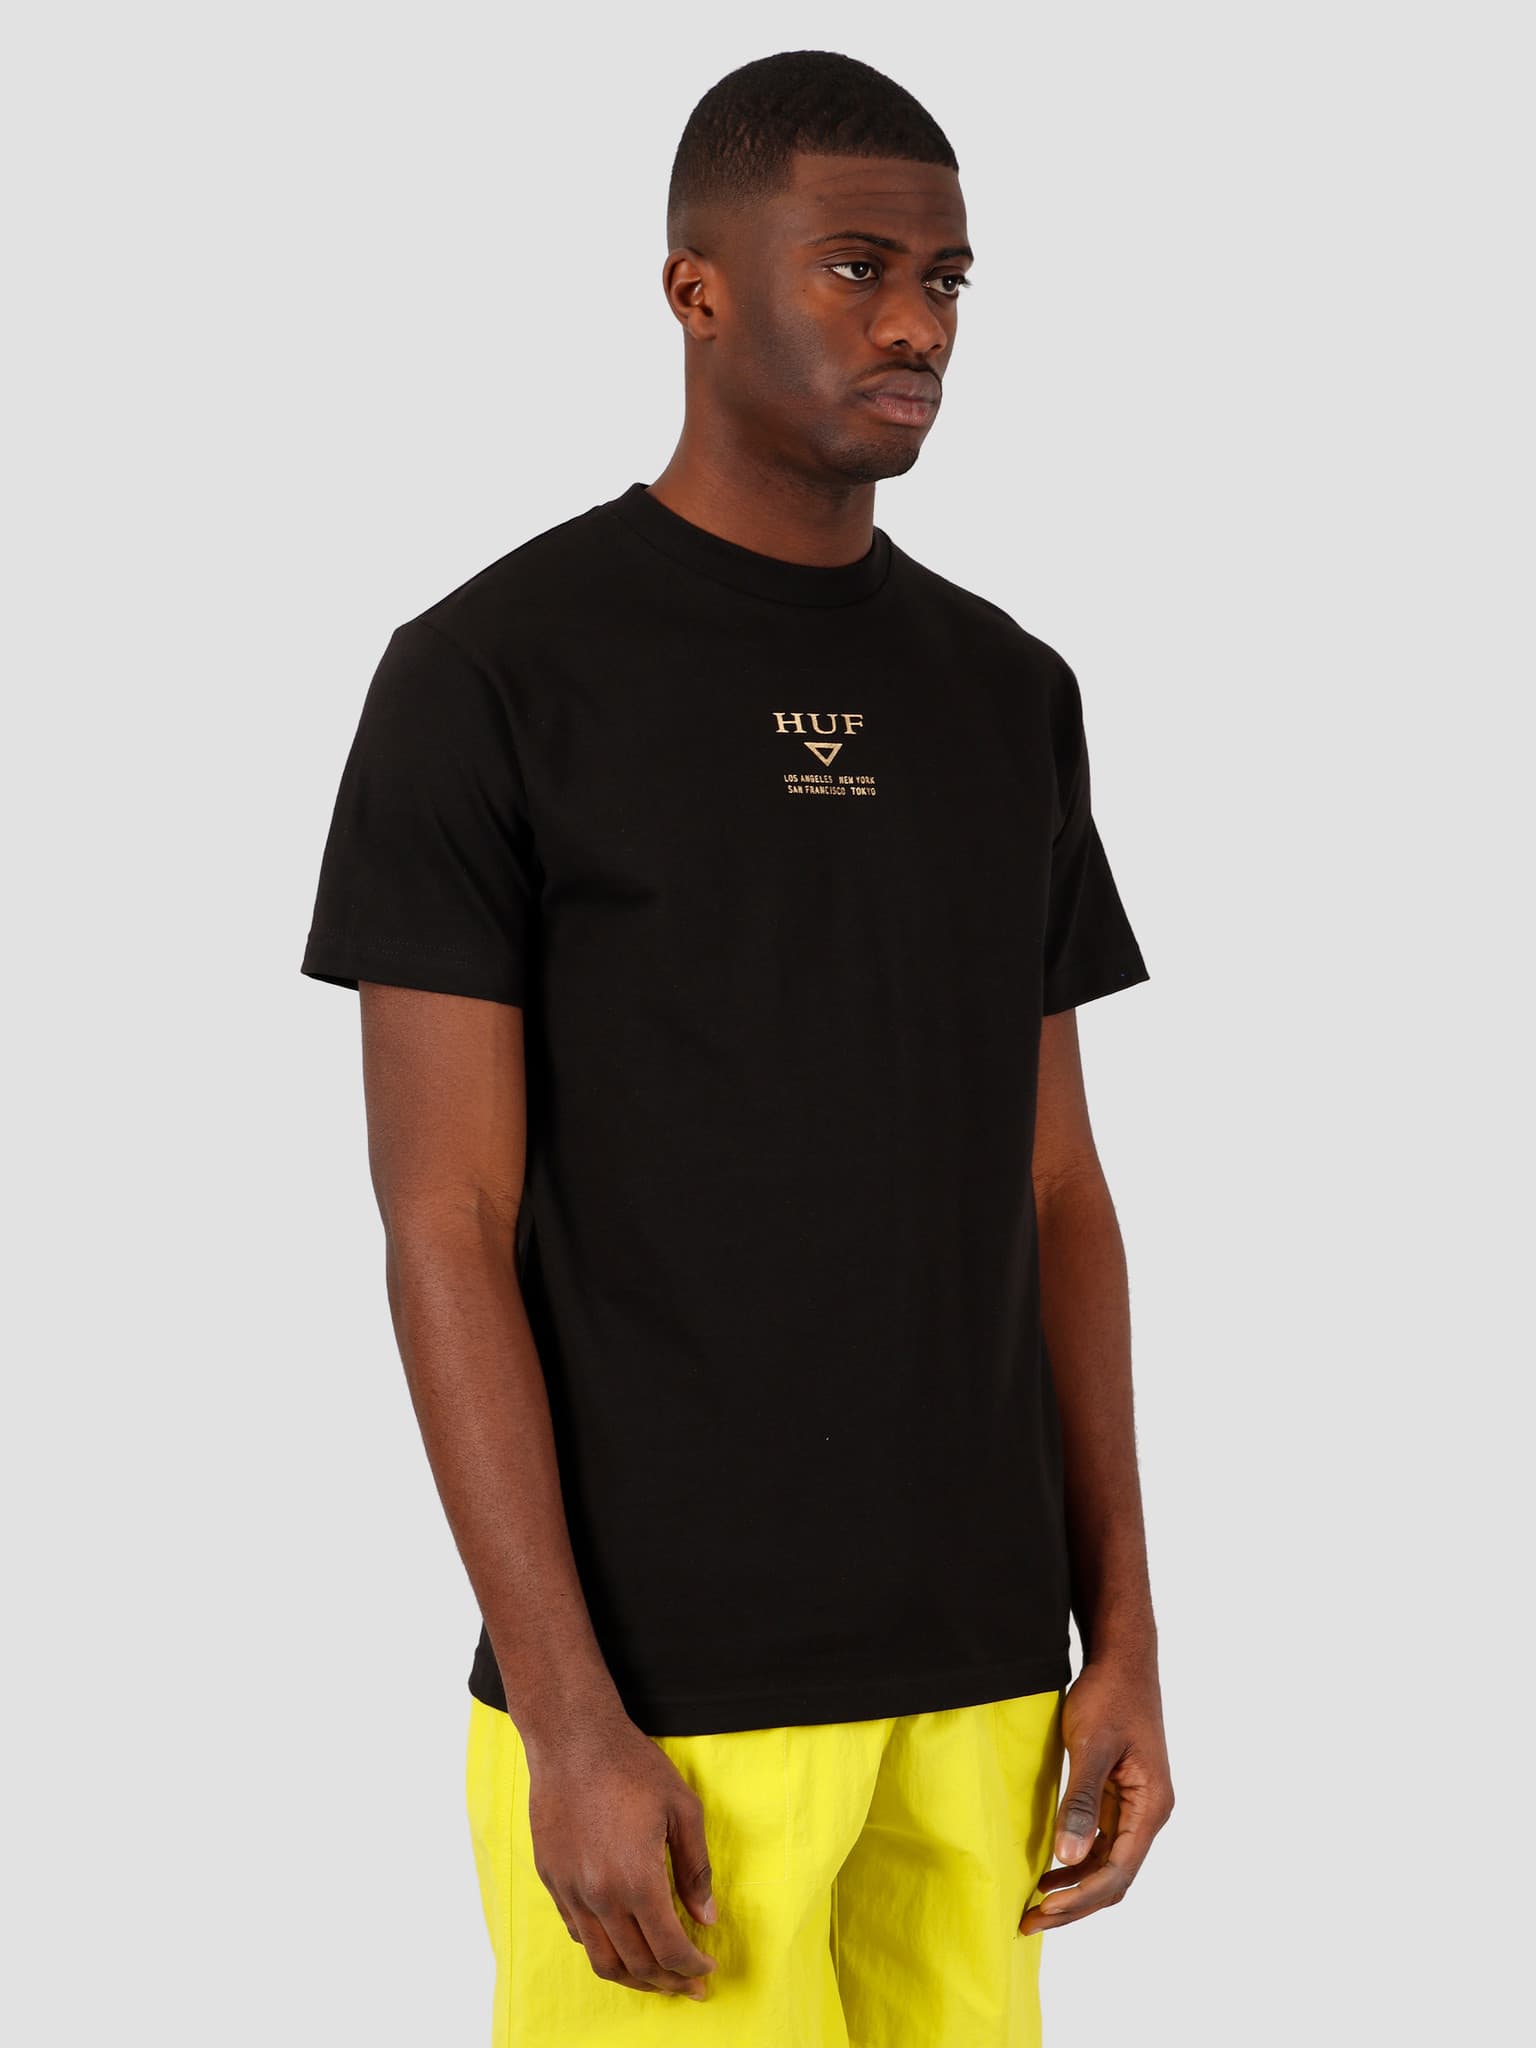 Hufex T-Shirt Black TS01022